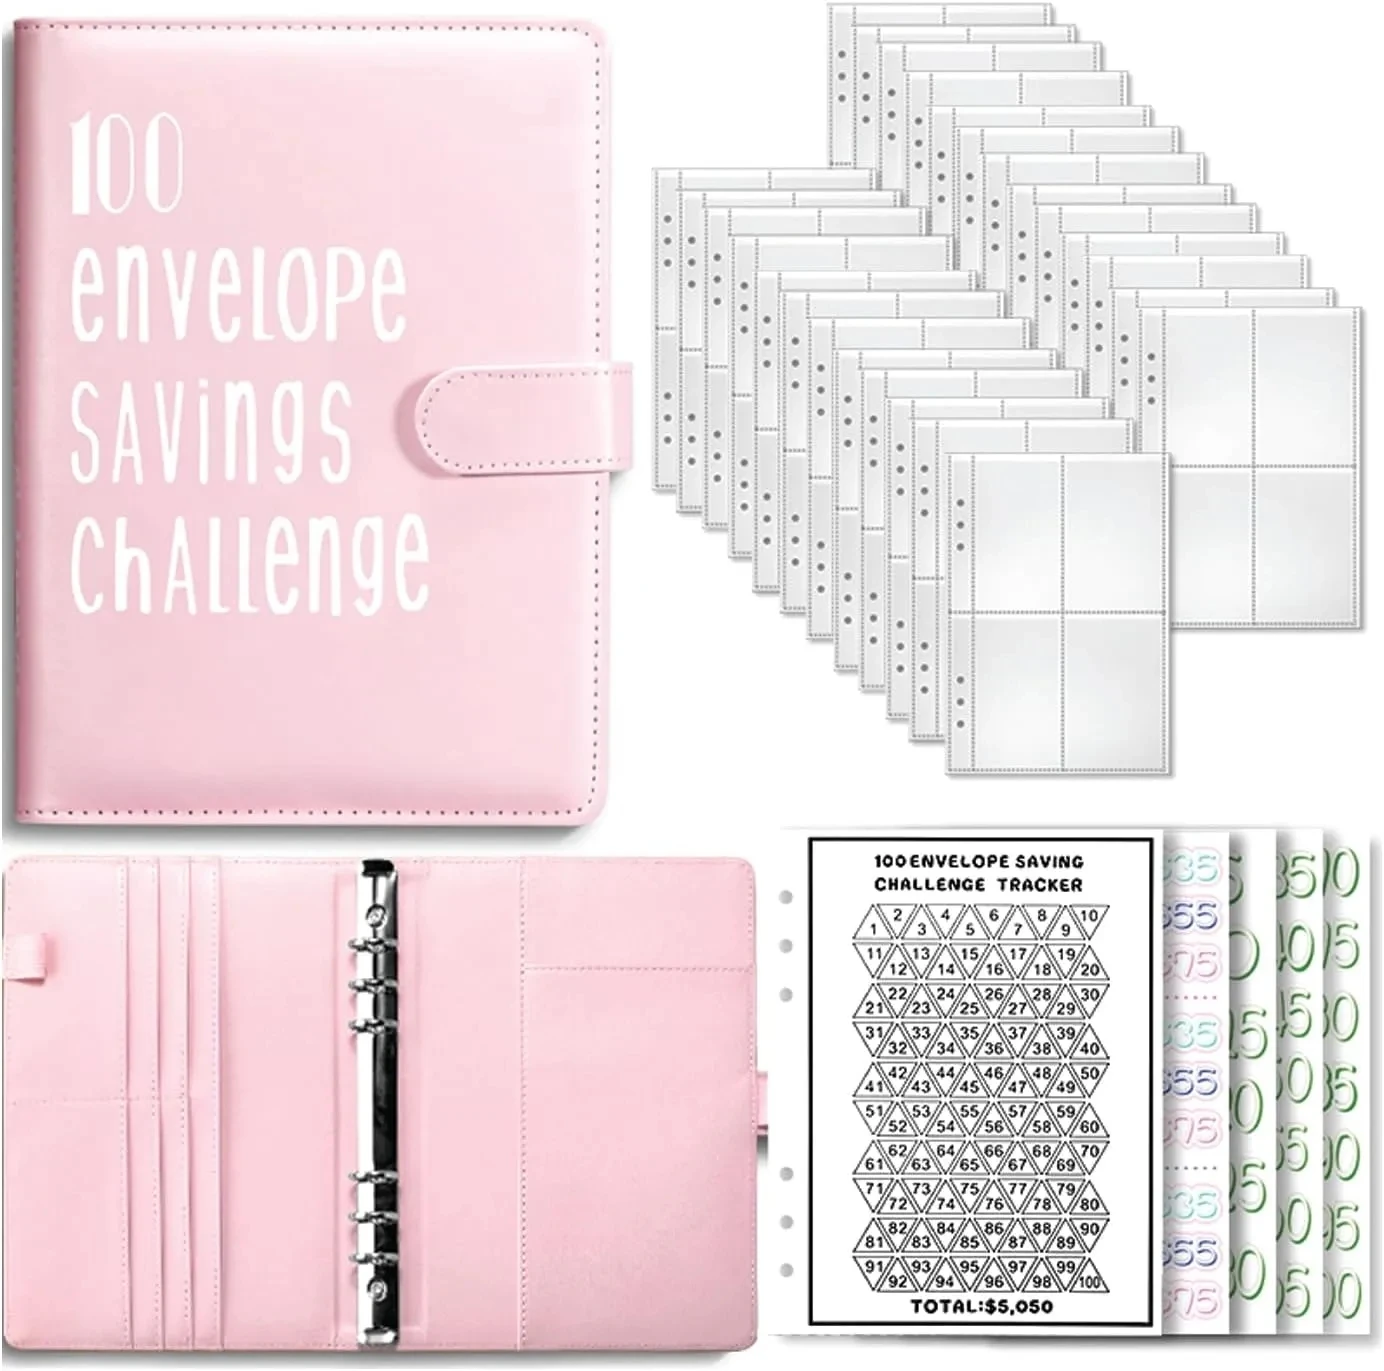 

100 Envelope Challenge Binder Easy and Fun Way to Save $5,050 Savings Challenges Binder Budget Binder with Cash Envelopes